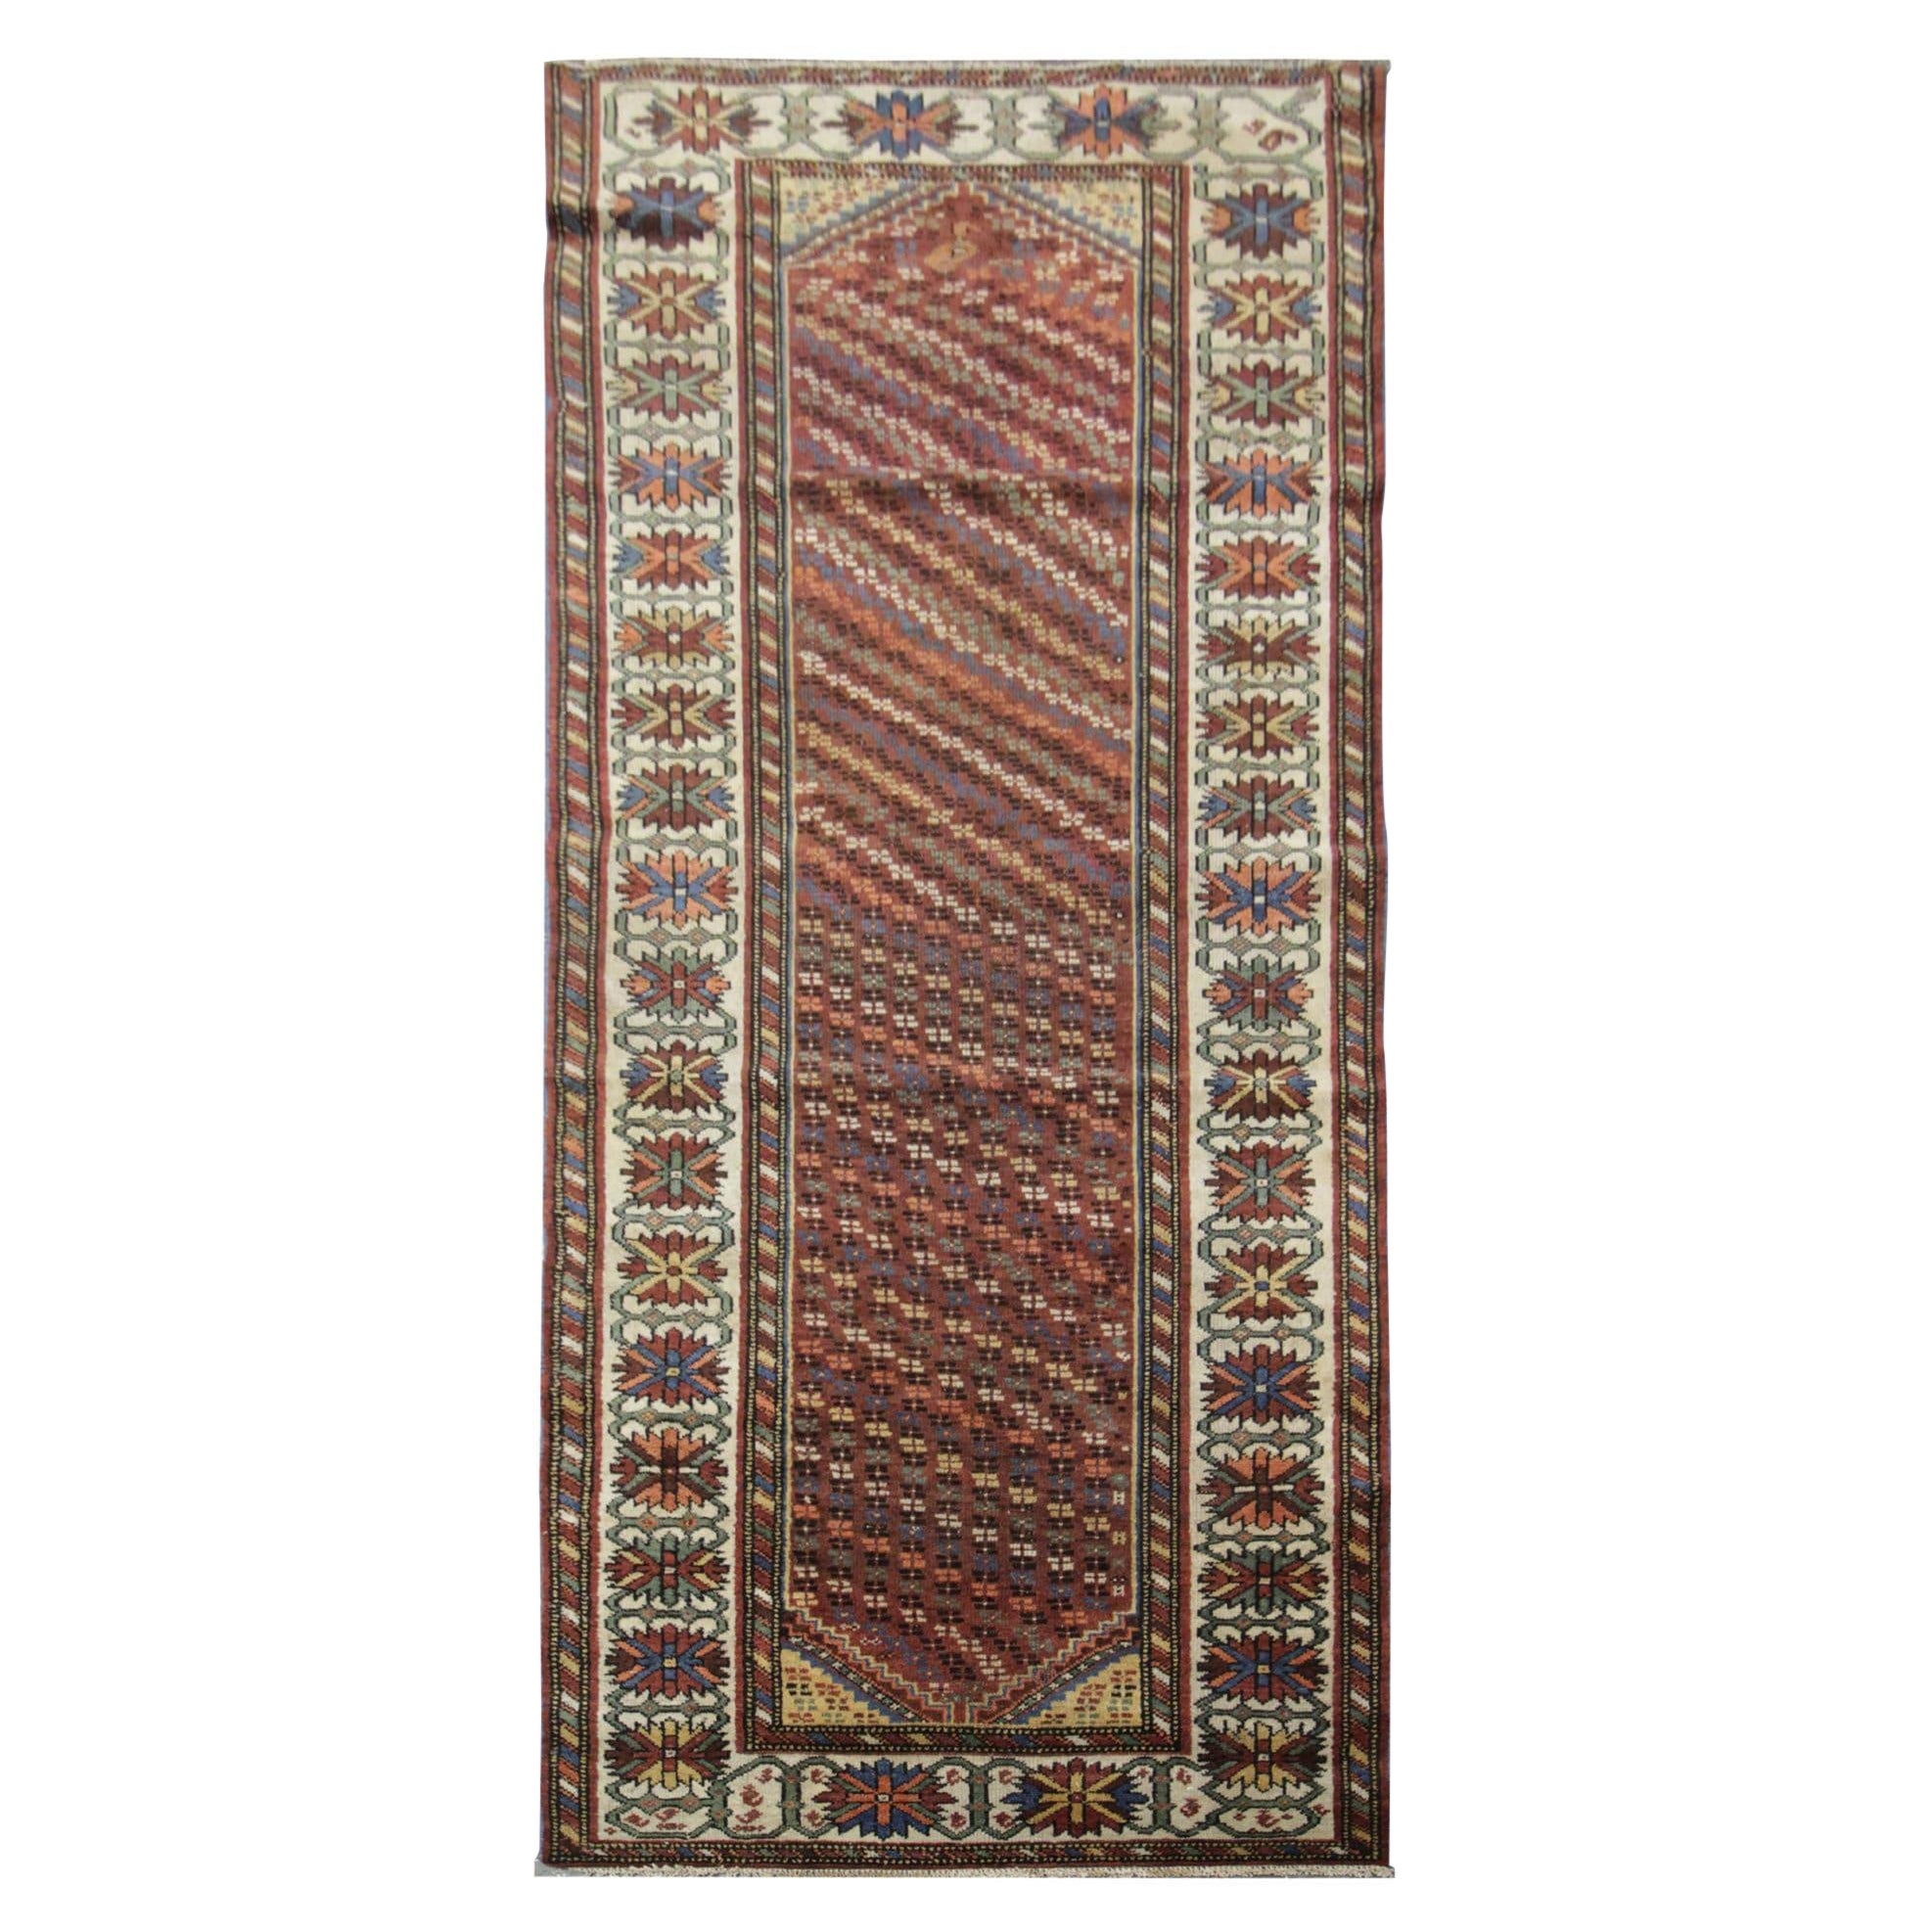 Antique Persian Oriental Wool Living Room Runner Rug Striped Handmade Carpet 